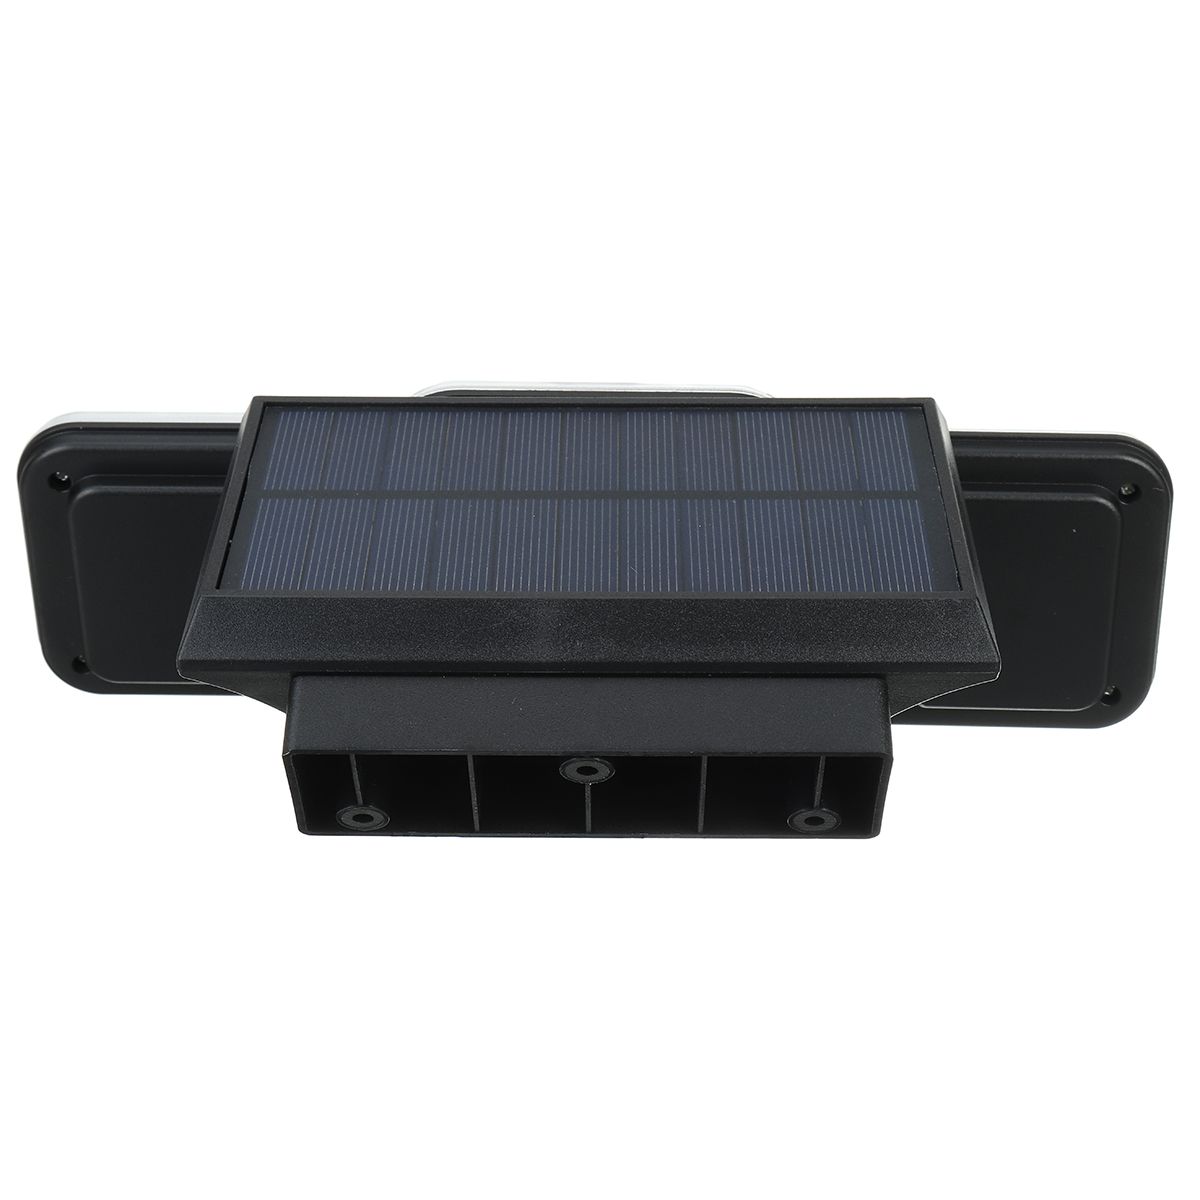 138-COB-LED-Solar-Panel-Street-Light-Outdoor-PIR-Motion-Sensor-Security-Lamp-1755257